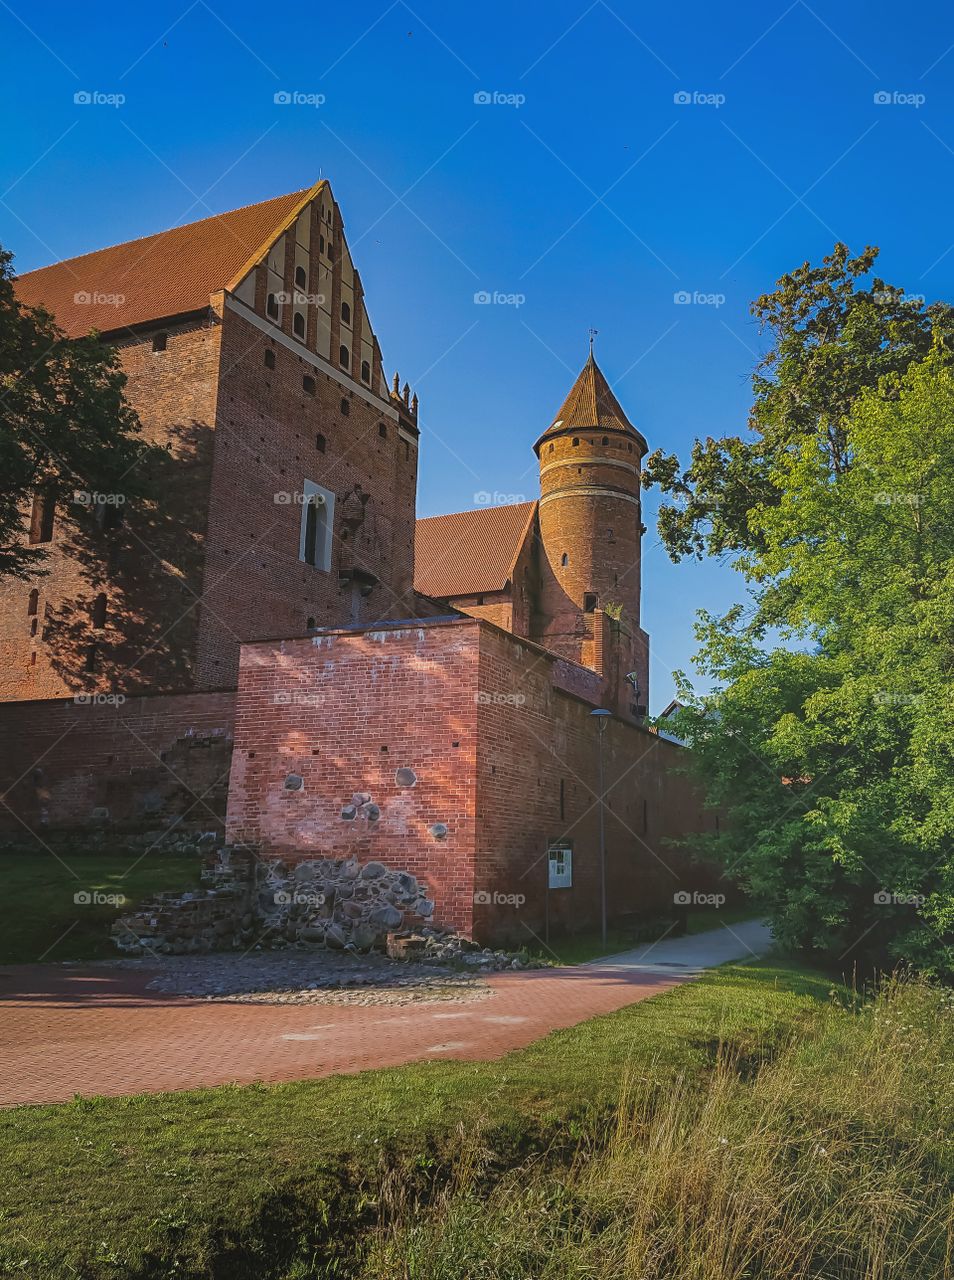 Castle in Olsztyn, Poland